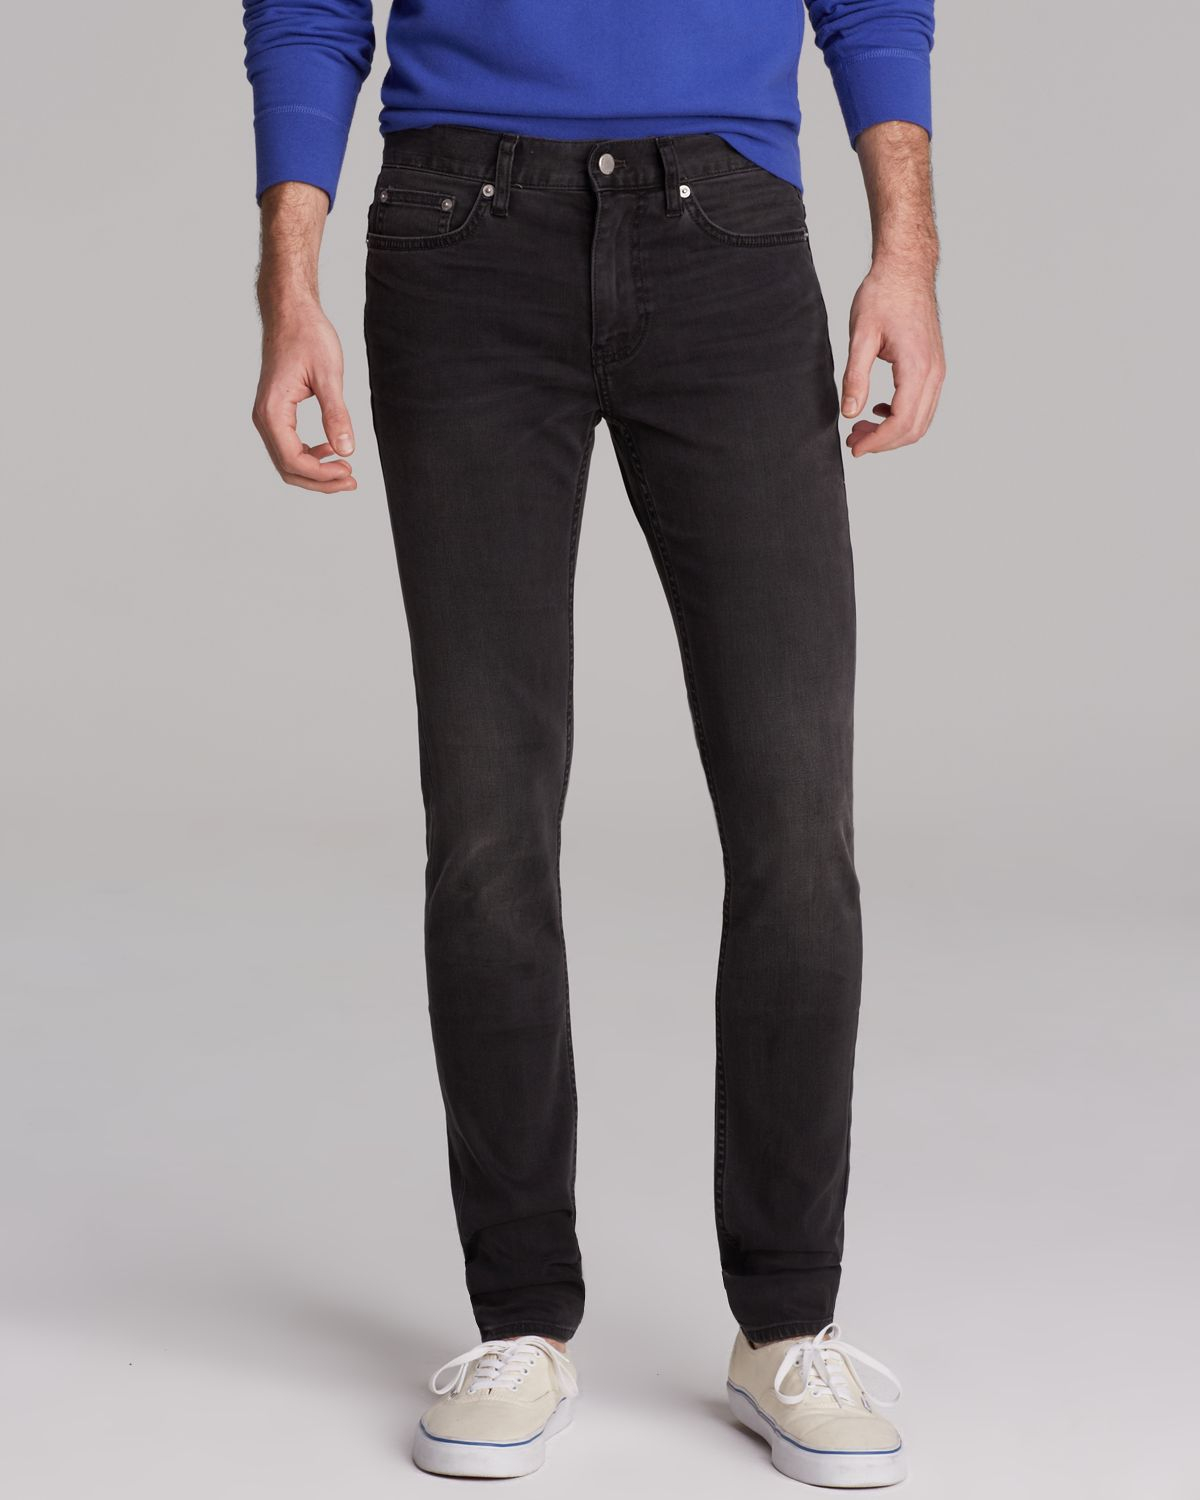 BLK DNM Jeans Slim Fit in Fulton Black for Men - Lyst